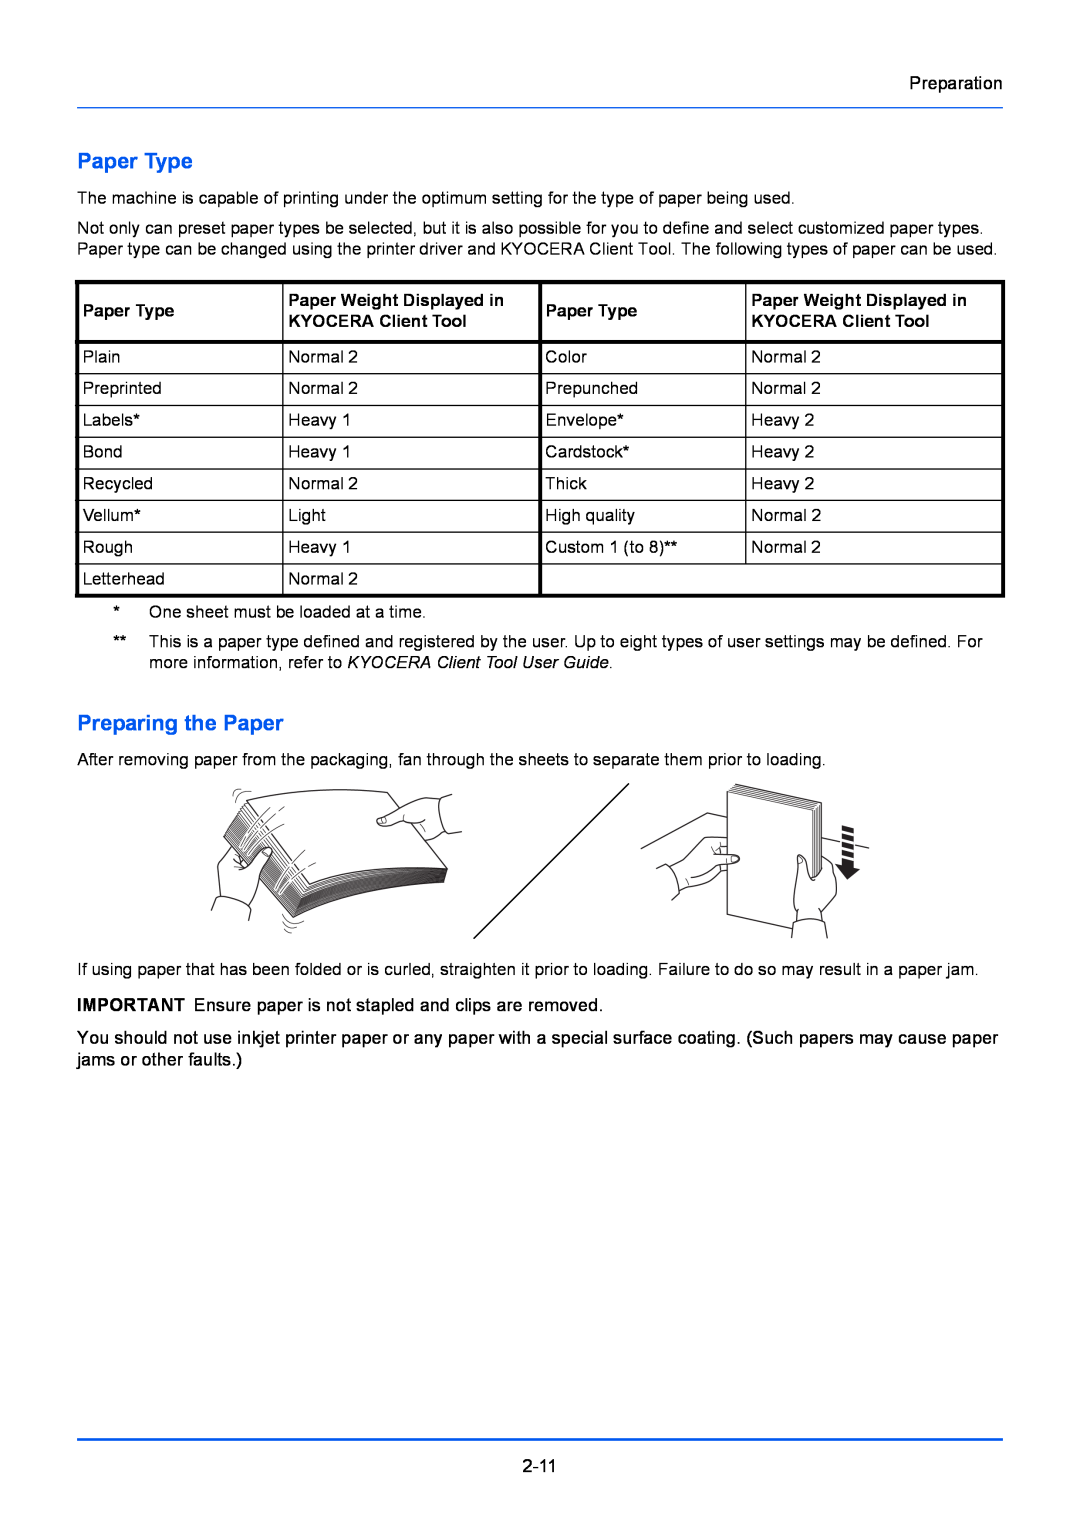 Kyocera FS-1220MFP, FS-1020MFP manual Paper Type, Preparing the Paper 